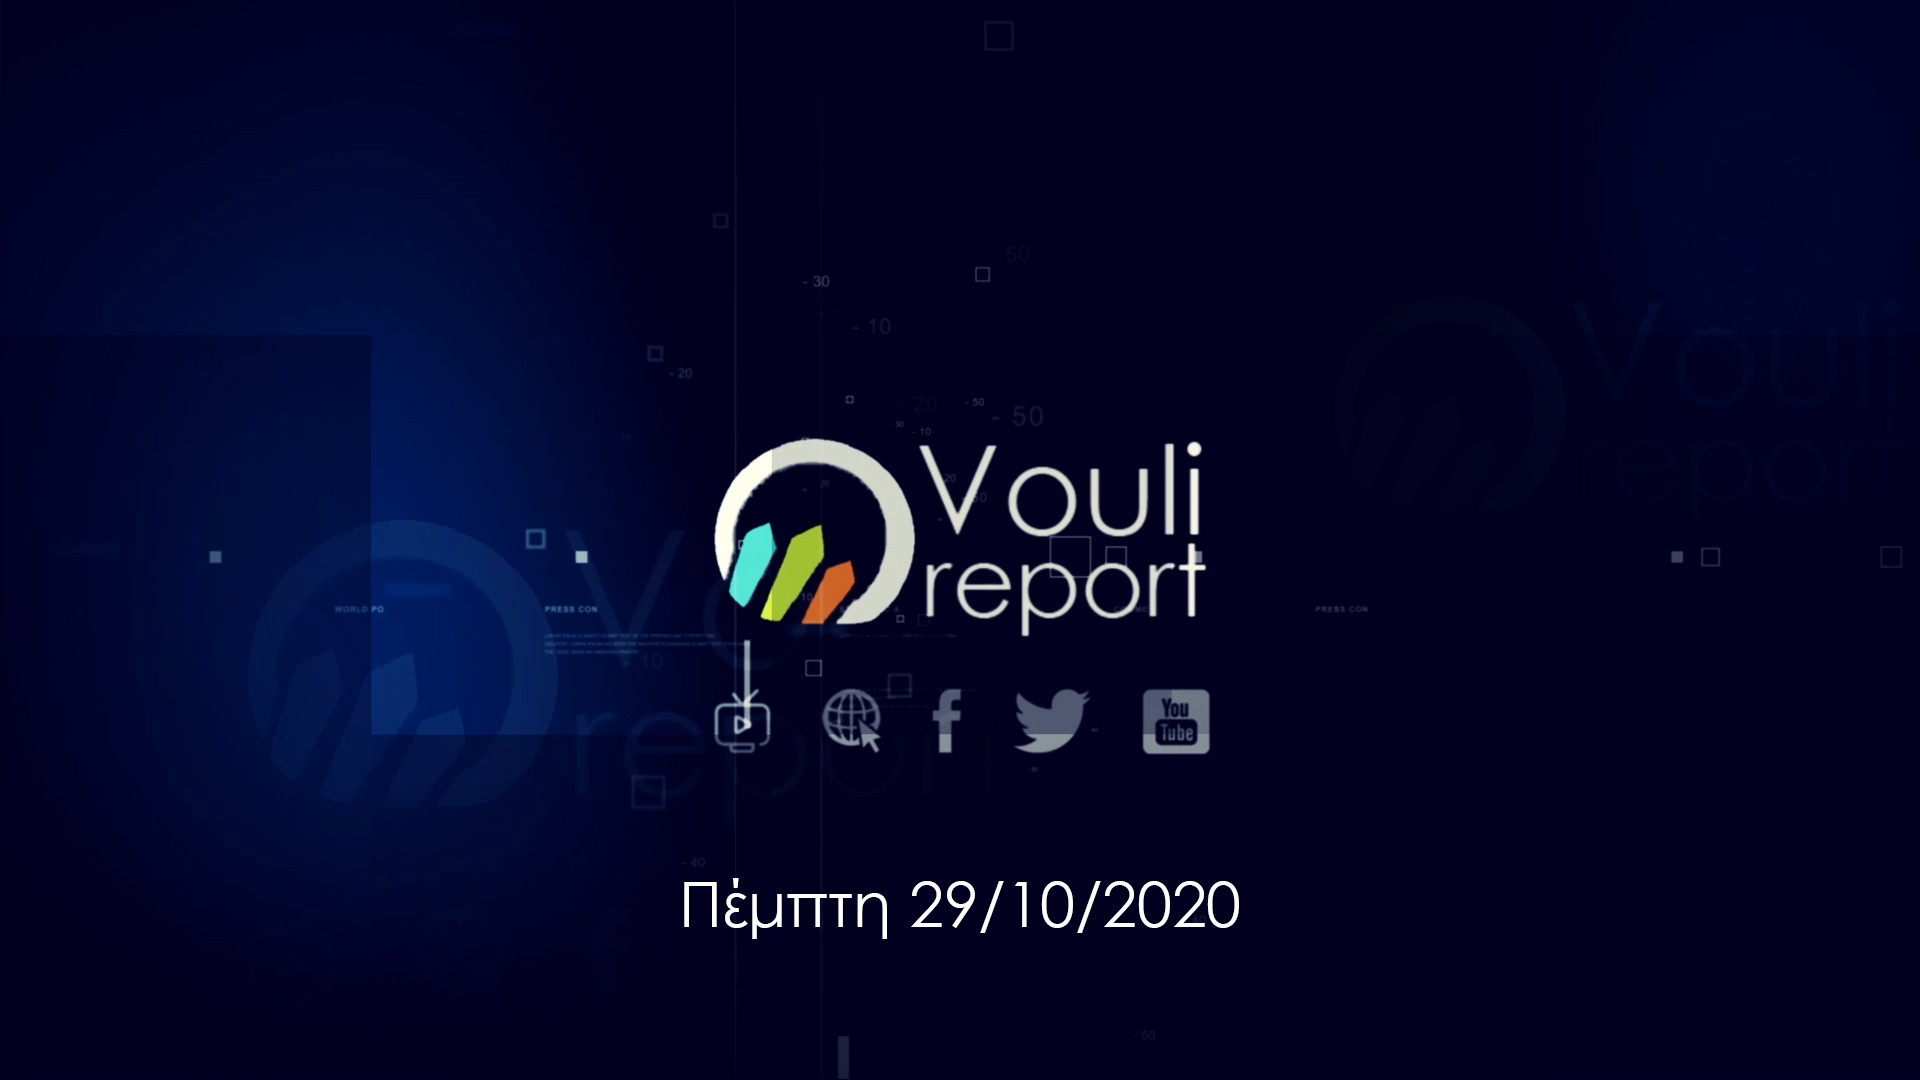 Vouli report | 29/10/2020